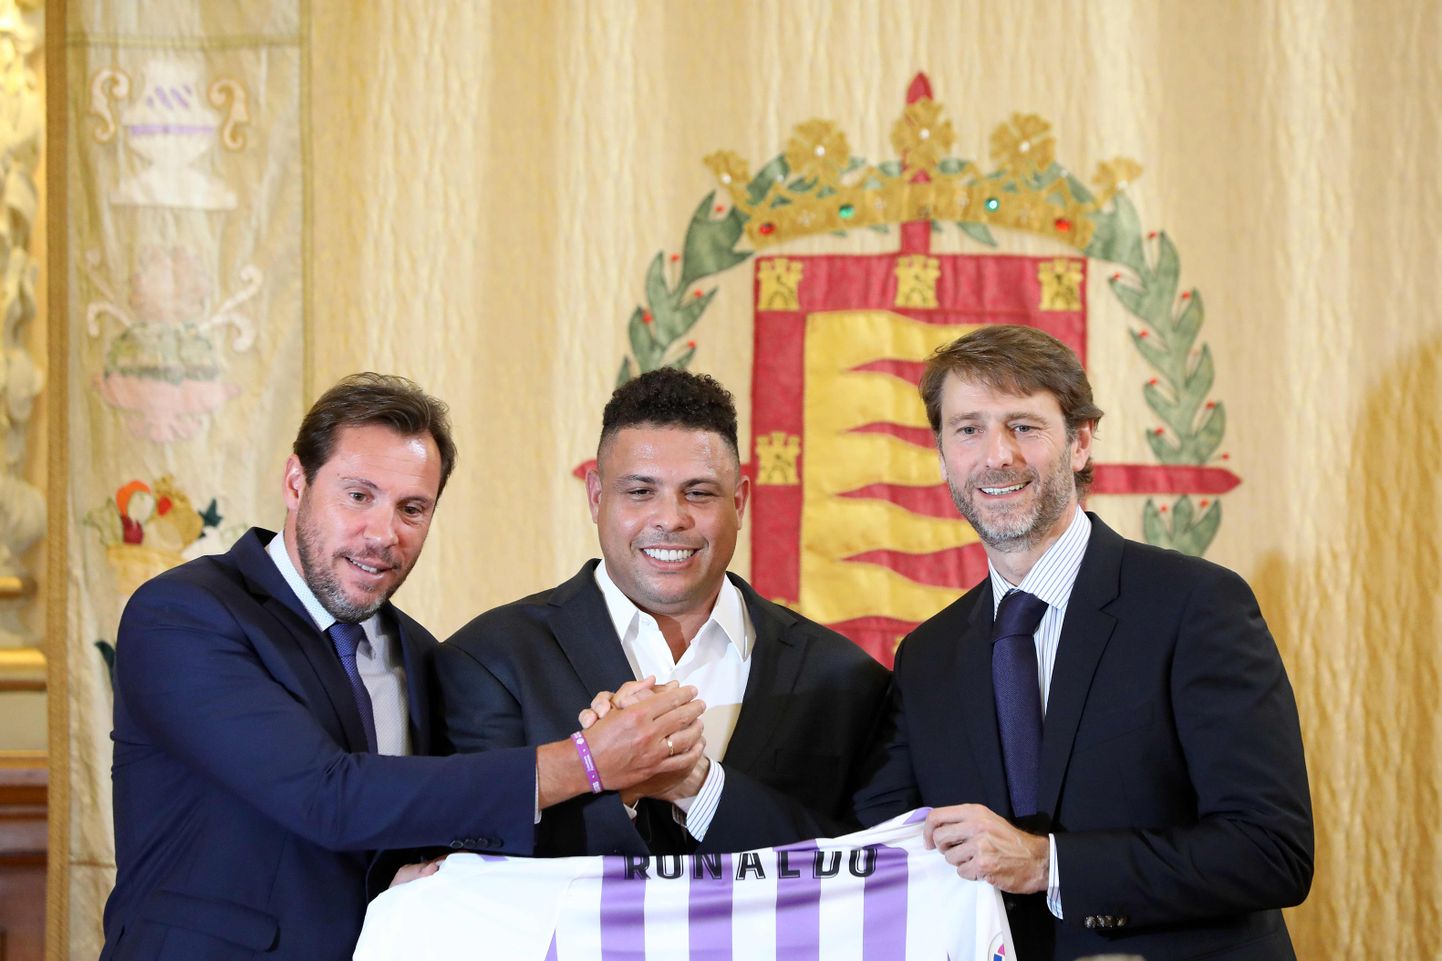 Ronaldo Real Valladolidi särgiga